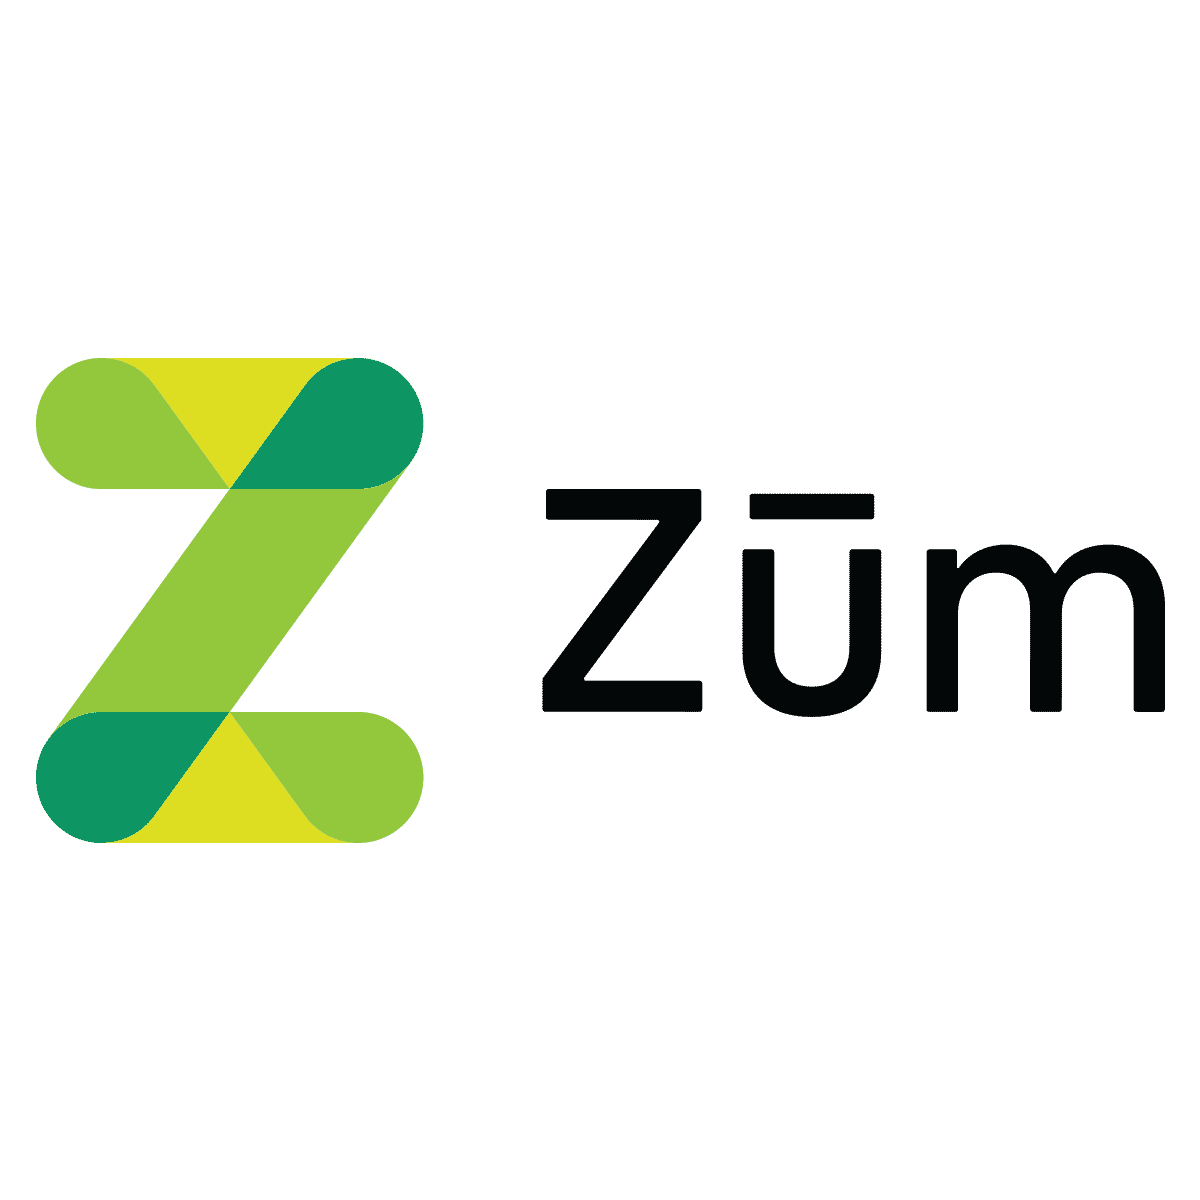 Zum Statistics 2023 and Zum user count